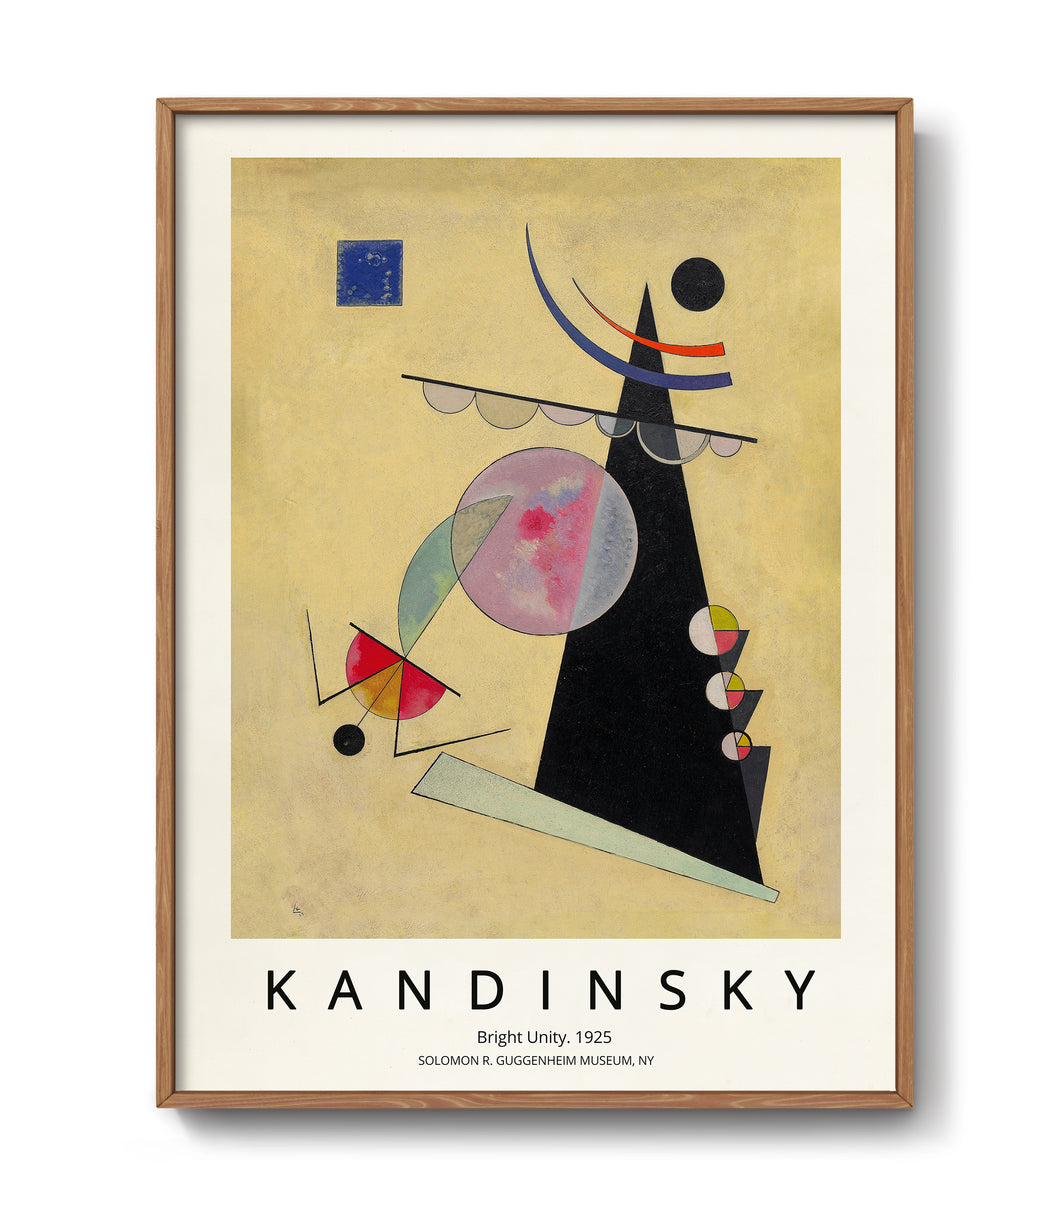 Bright Unity by Kandinsky, 1925